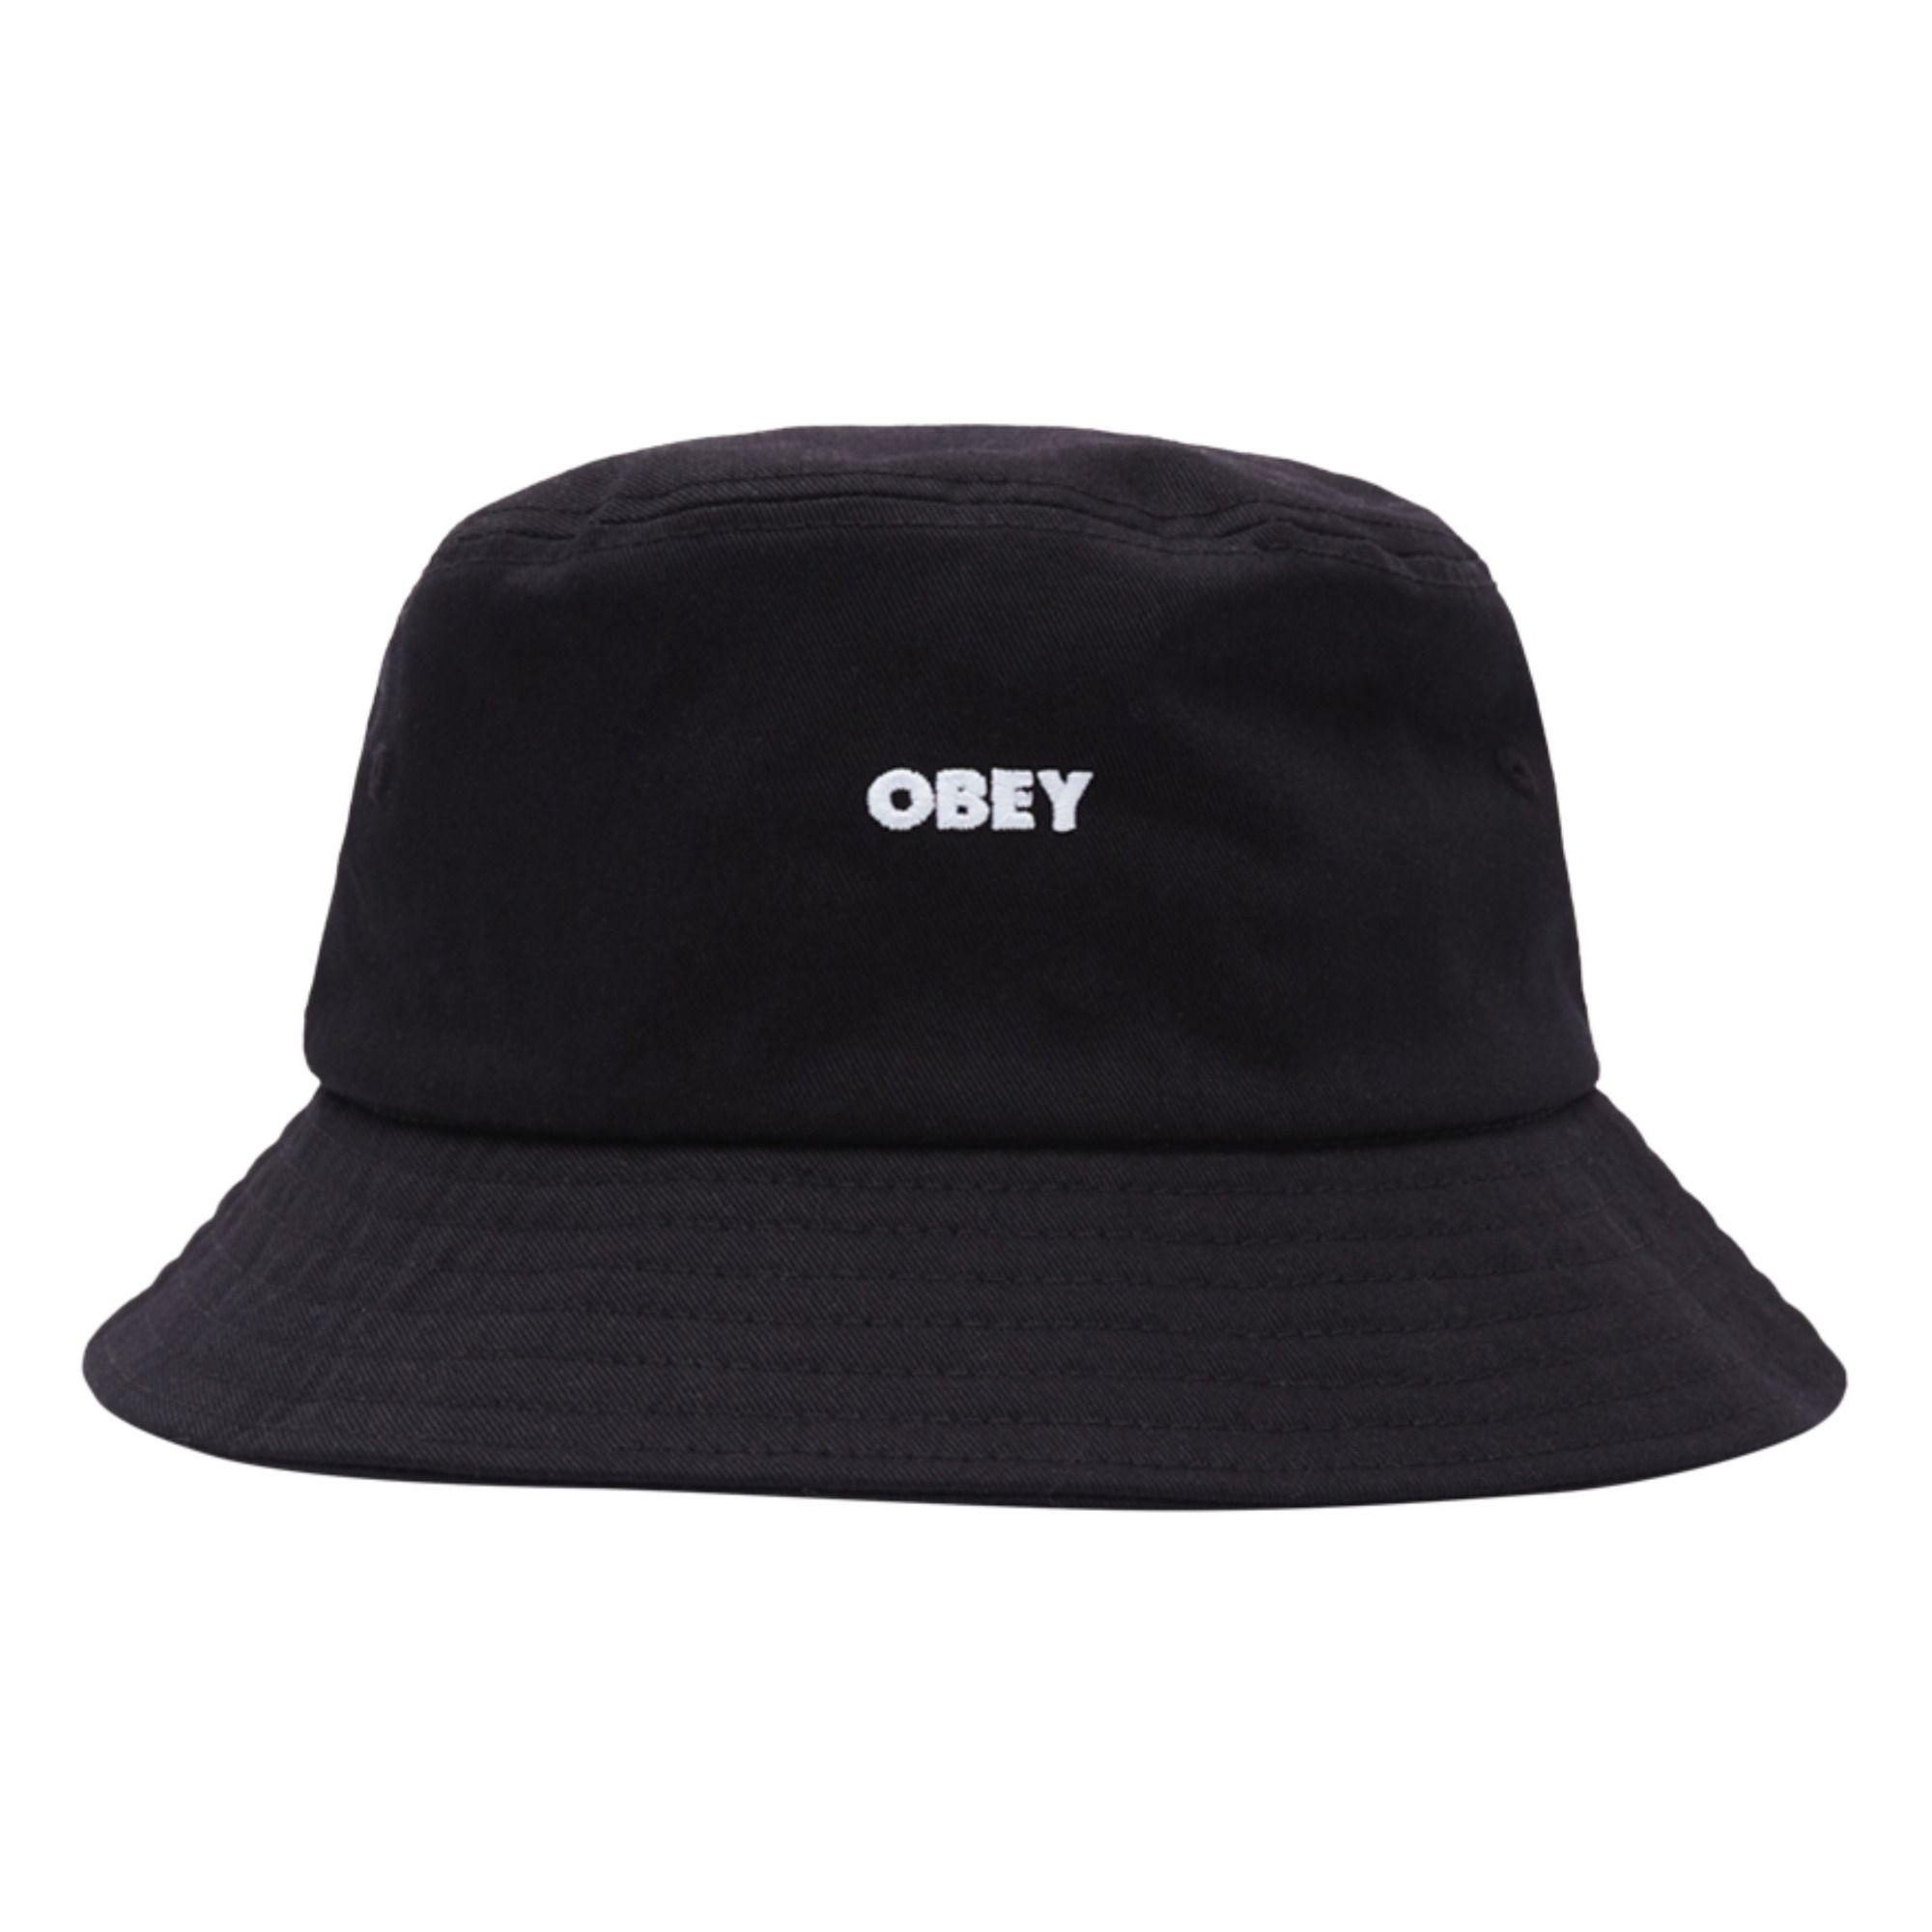 Obey - Bob Logo - Homme - Noir